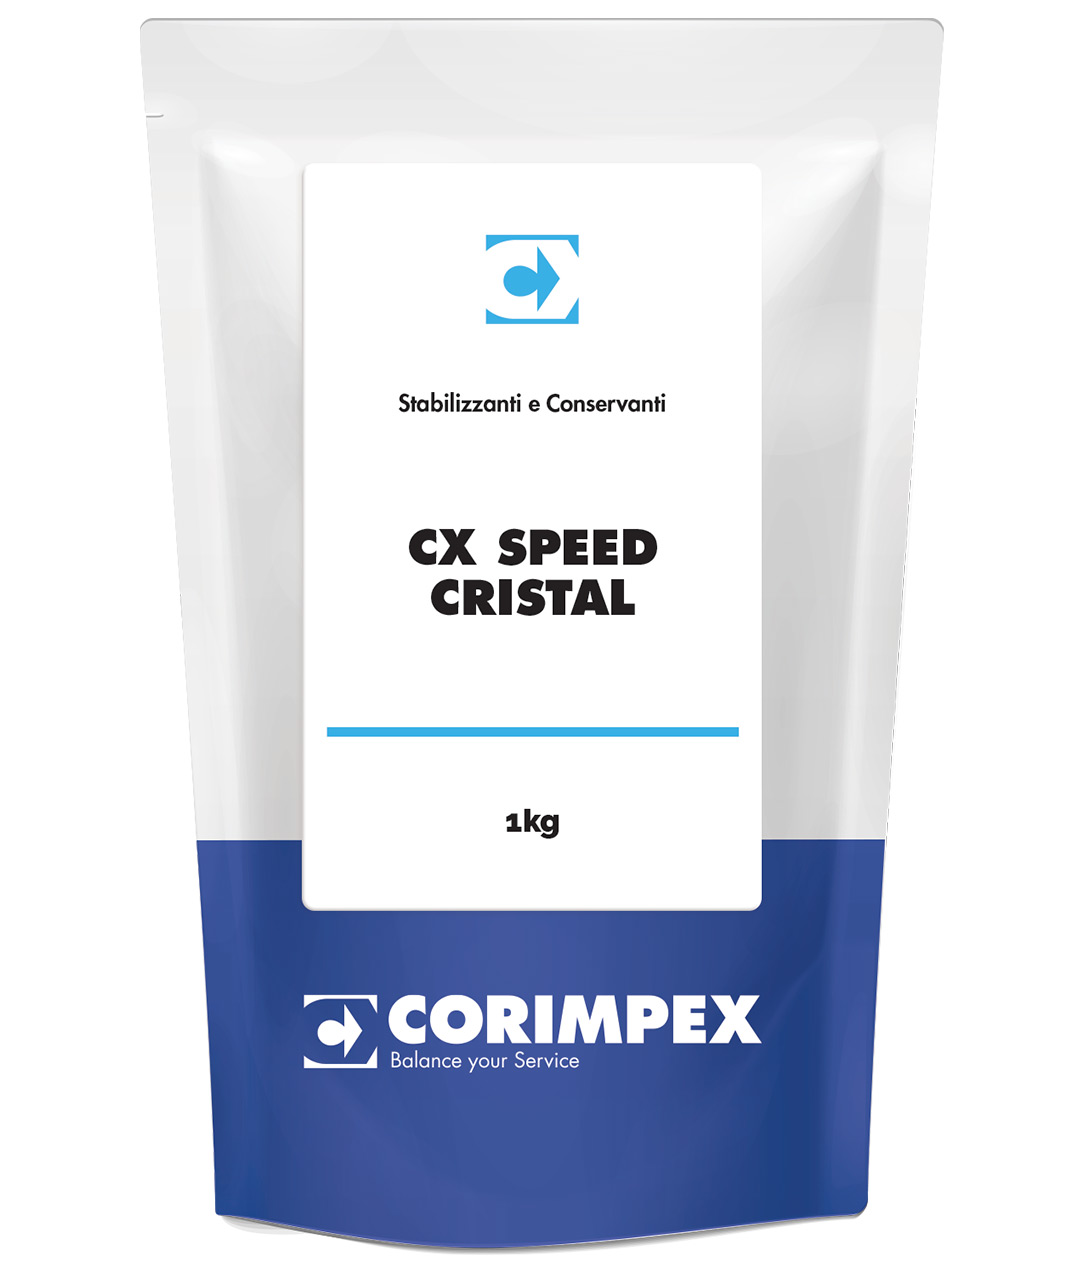 CX SPEED CRISTAL